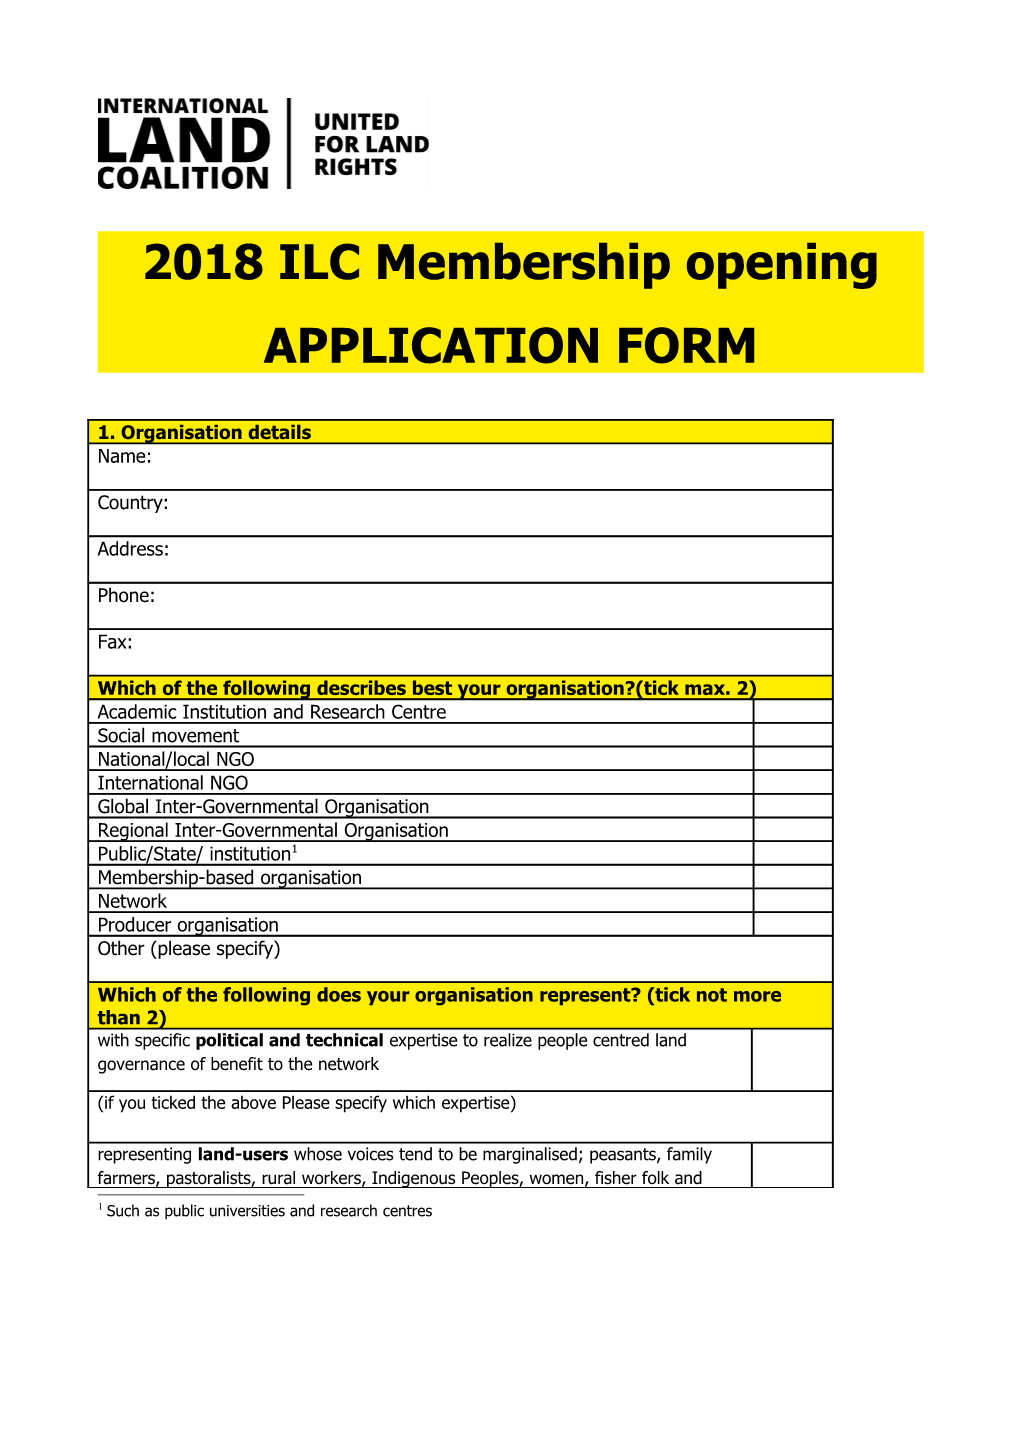 ILC Membership Application Form